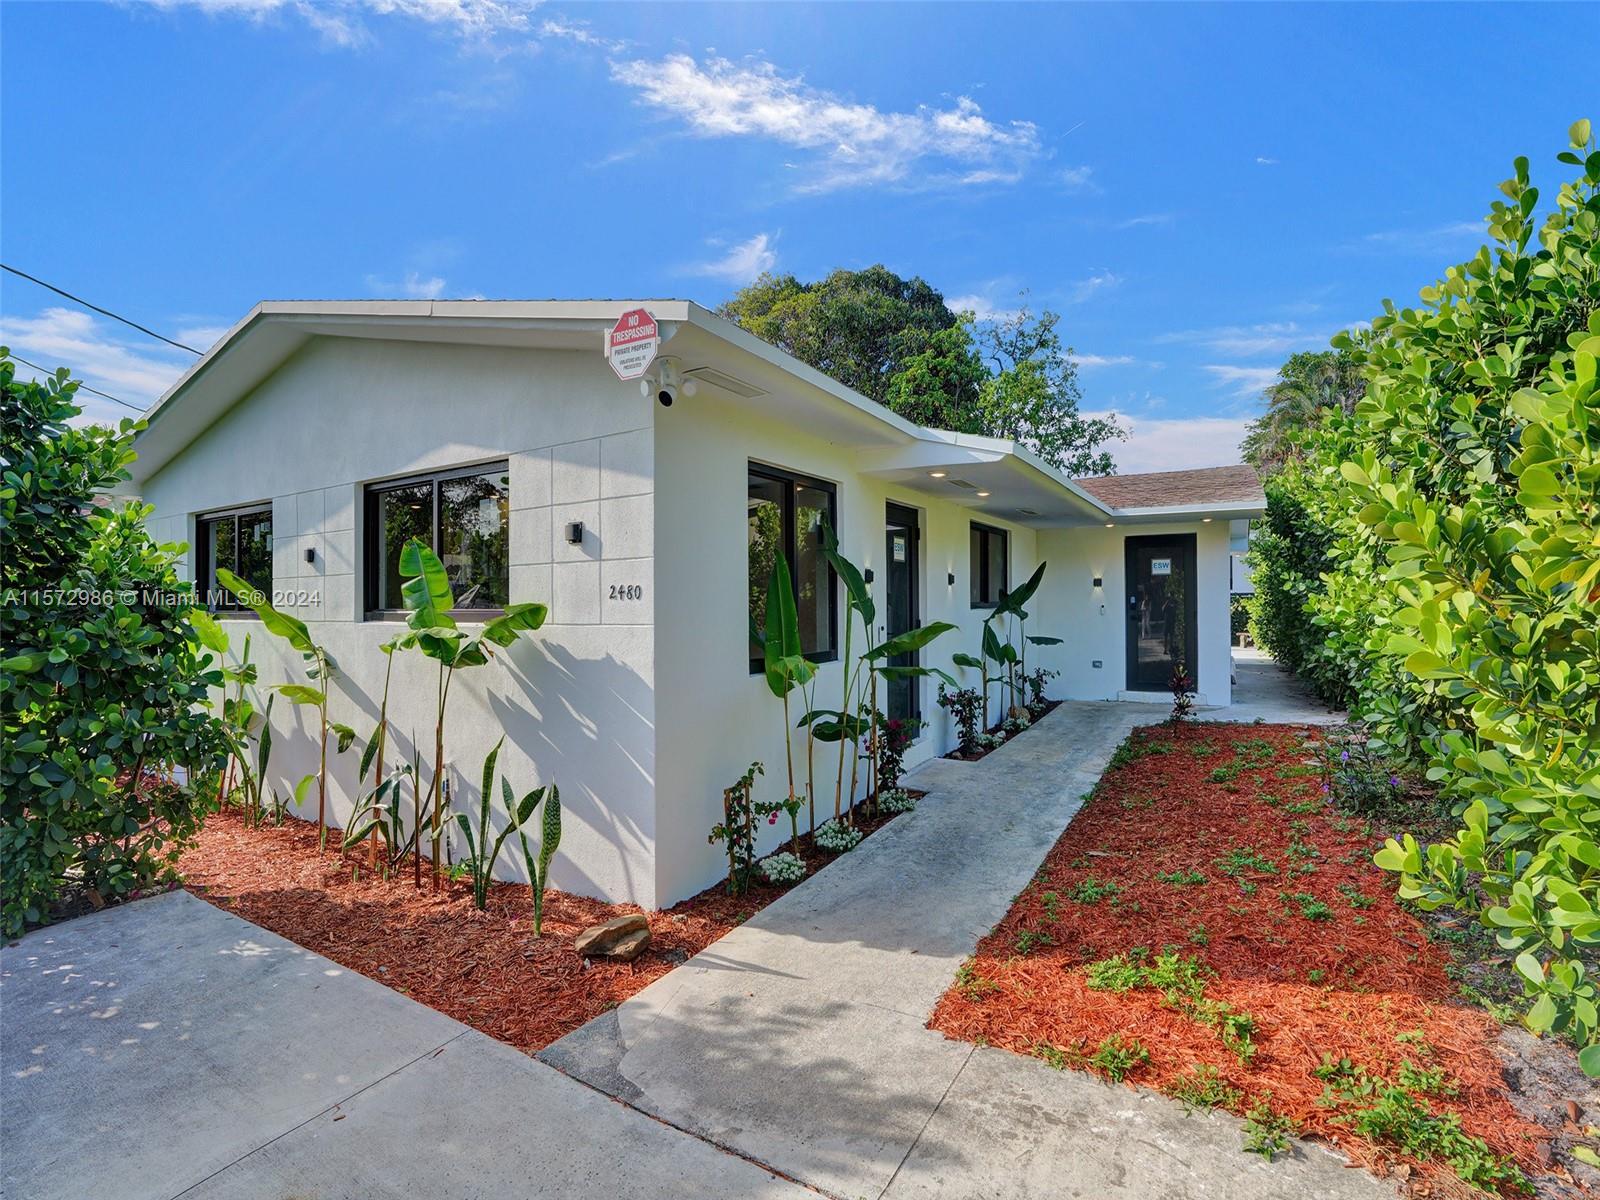 Rental Property at 2480 Ne 182 Ter Ter, North Miami Beach, Miami-Dade County, Florida -  - $1,200,000 MO.